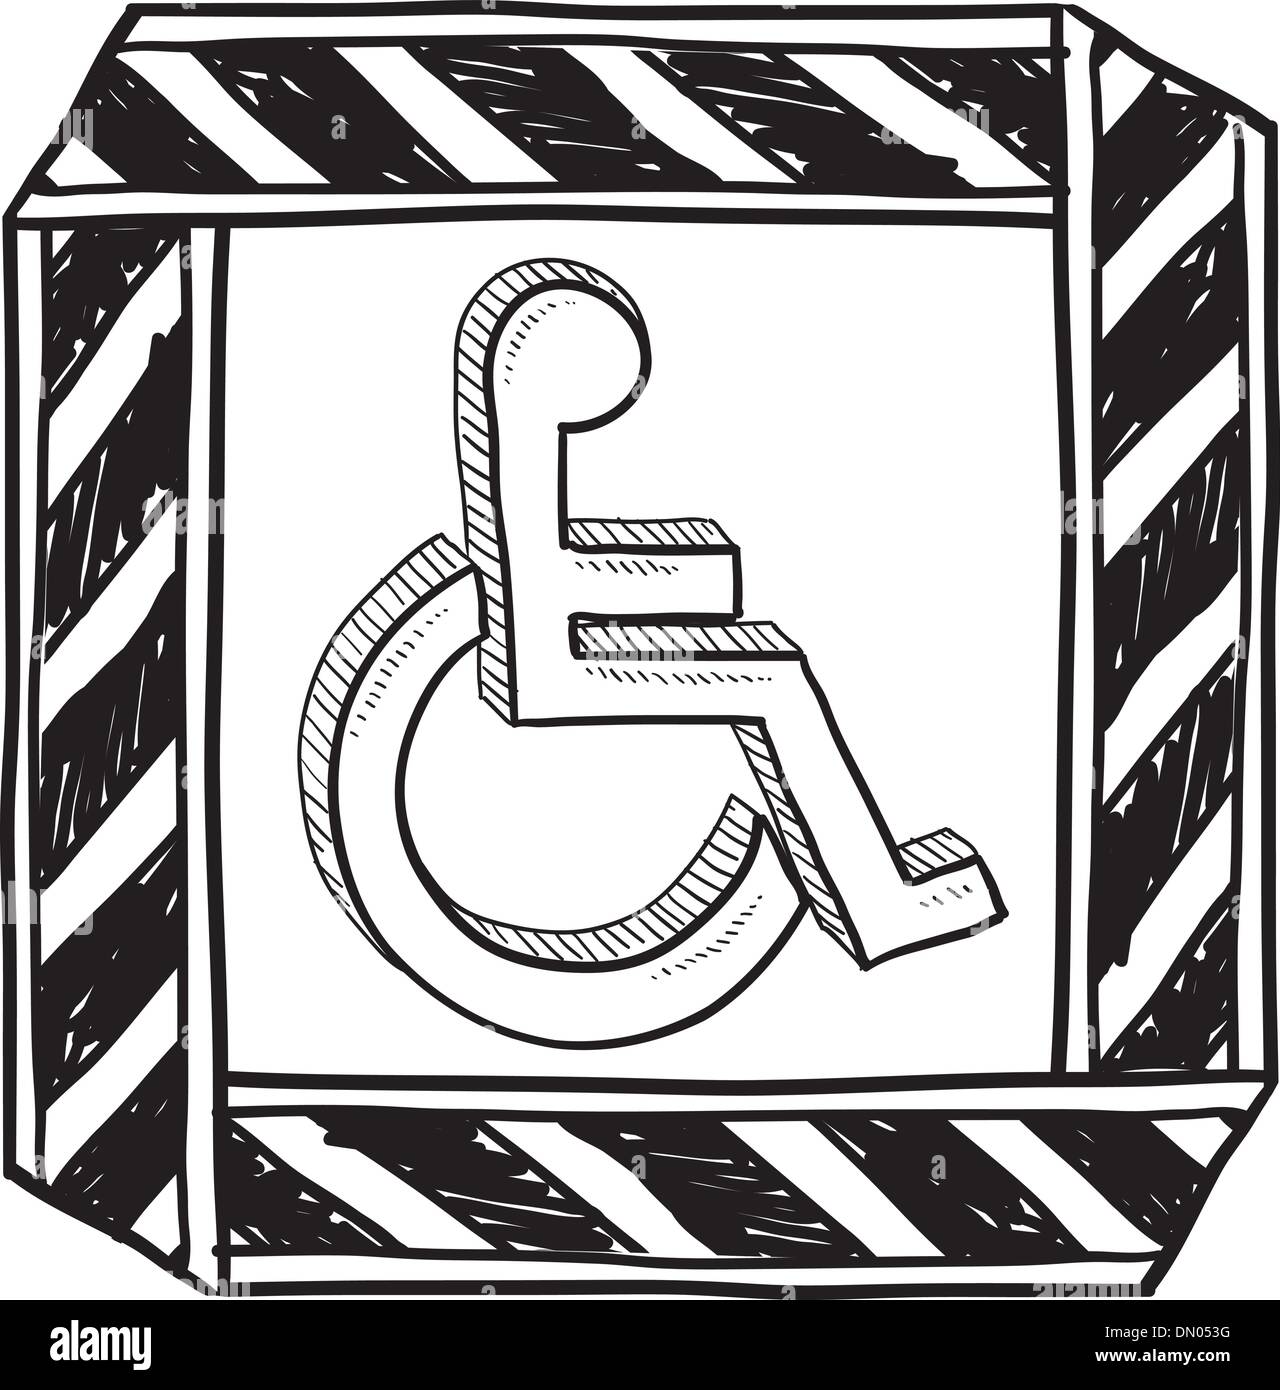 Handicapped sign vector sketch Stock Vector